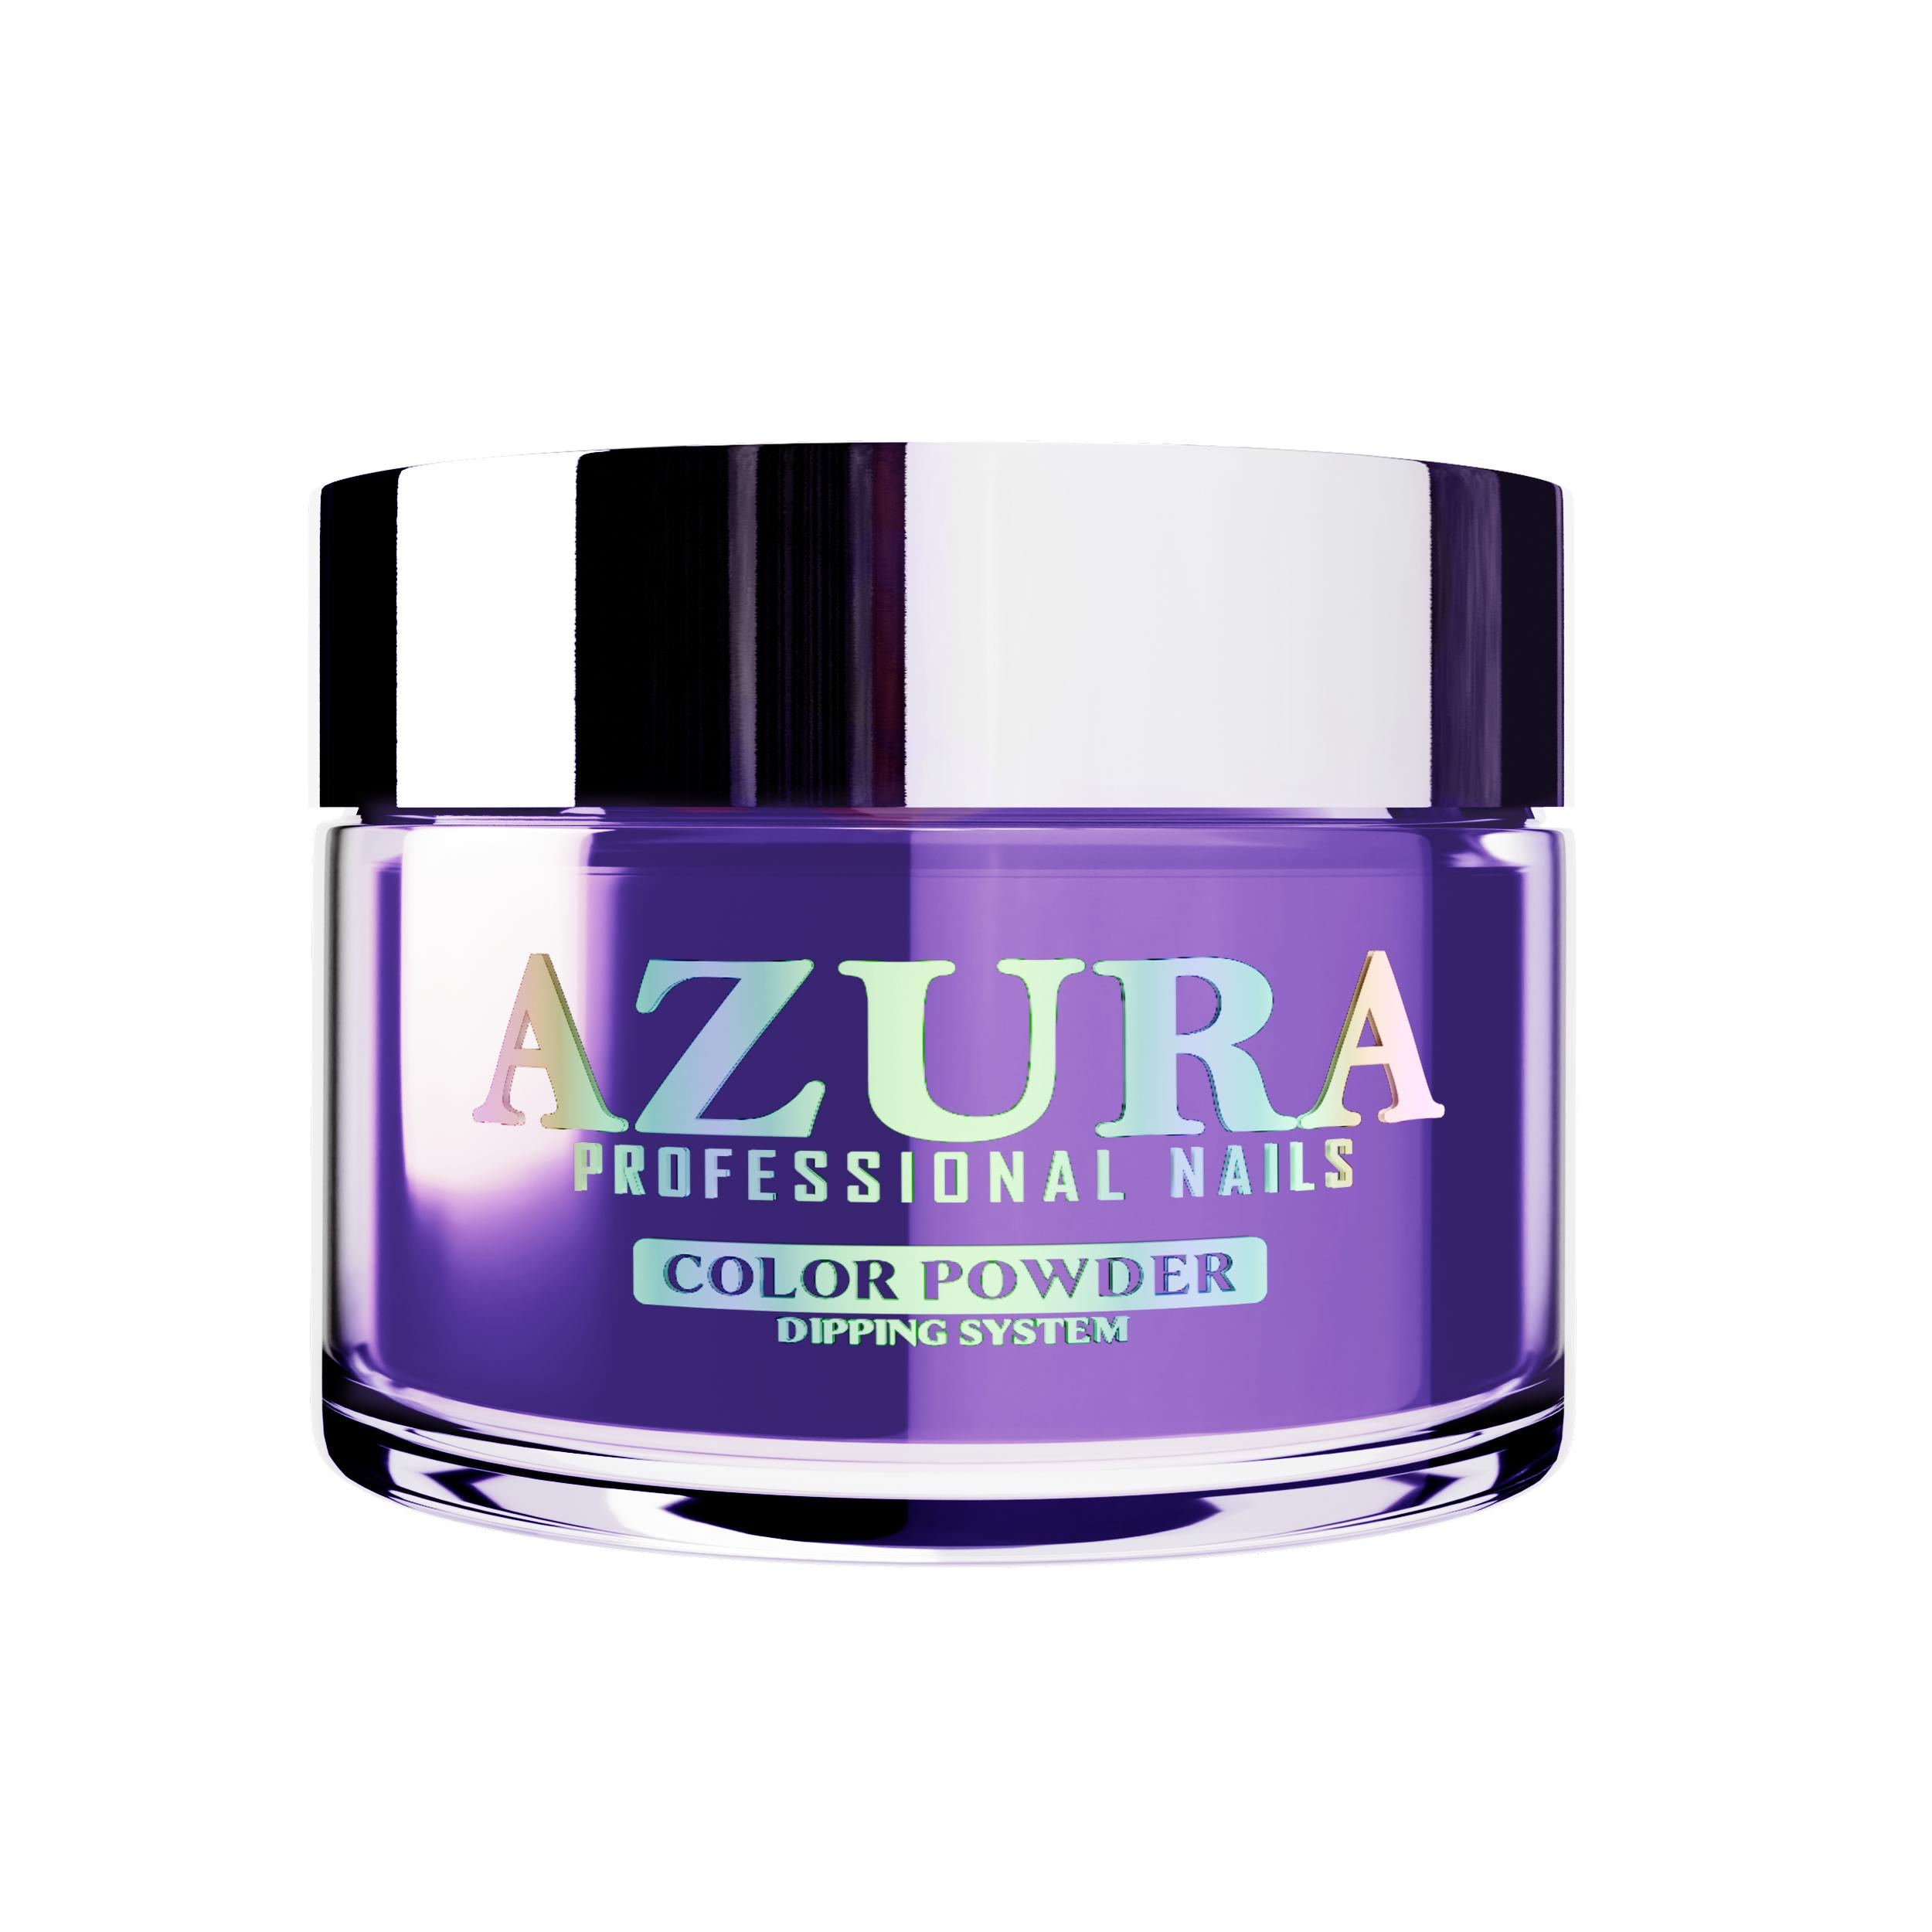 AZURA Acrylic & Dip Powder (Nail Powder 2in1) - NEON Deep Sea - 170-AZURA- Nail Supply American Gel Polish - Phuong Ni